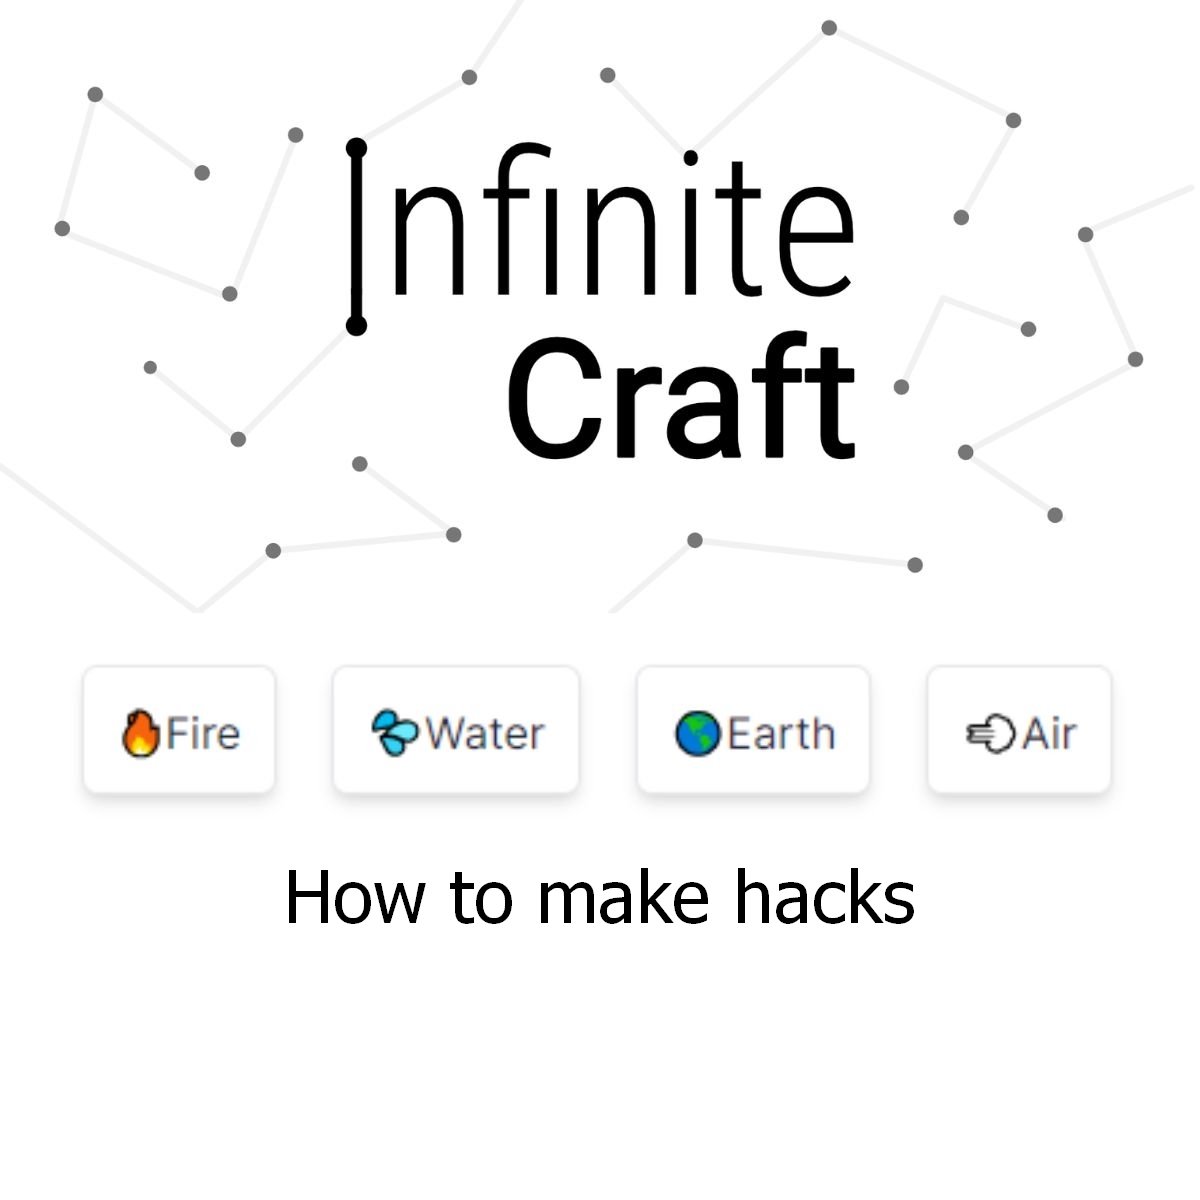 how to make hacks in infinite craft